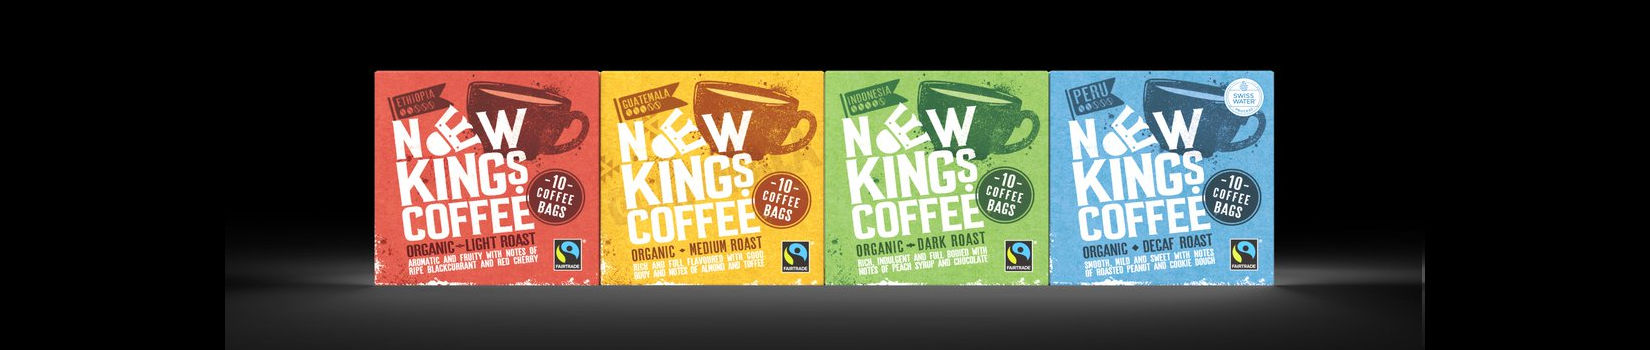 New Kings Coffee